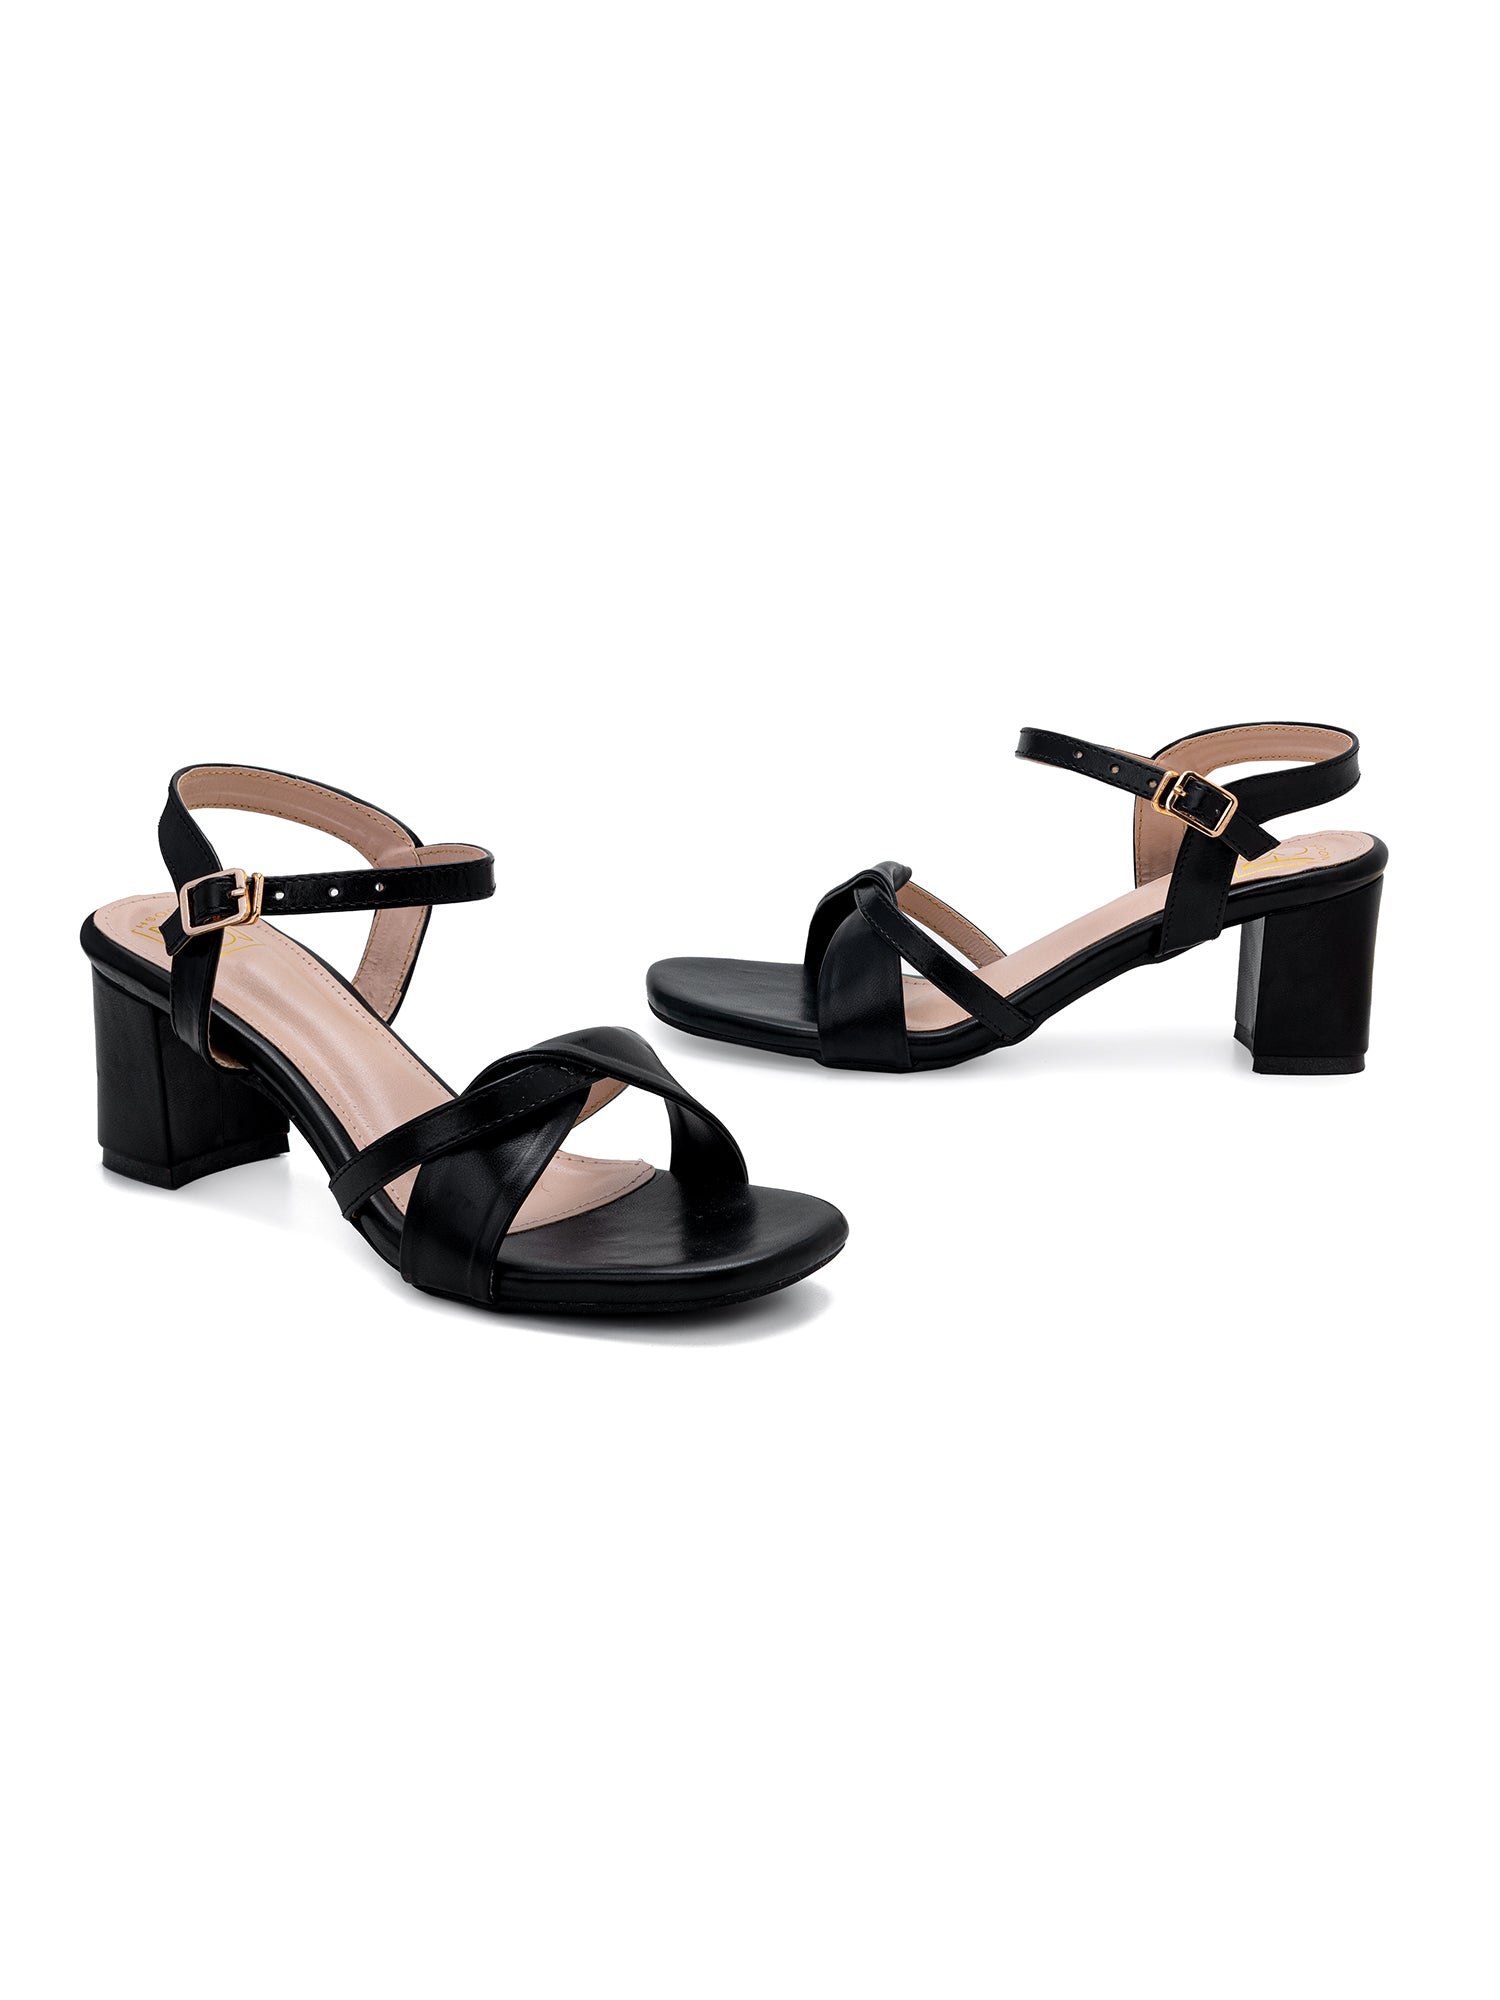 Vegan block heels for ajustable shoes | Tanya Heath Paris